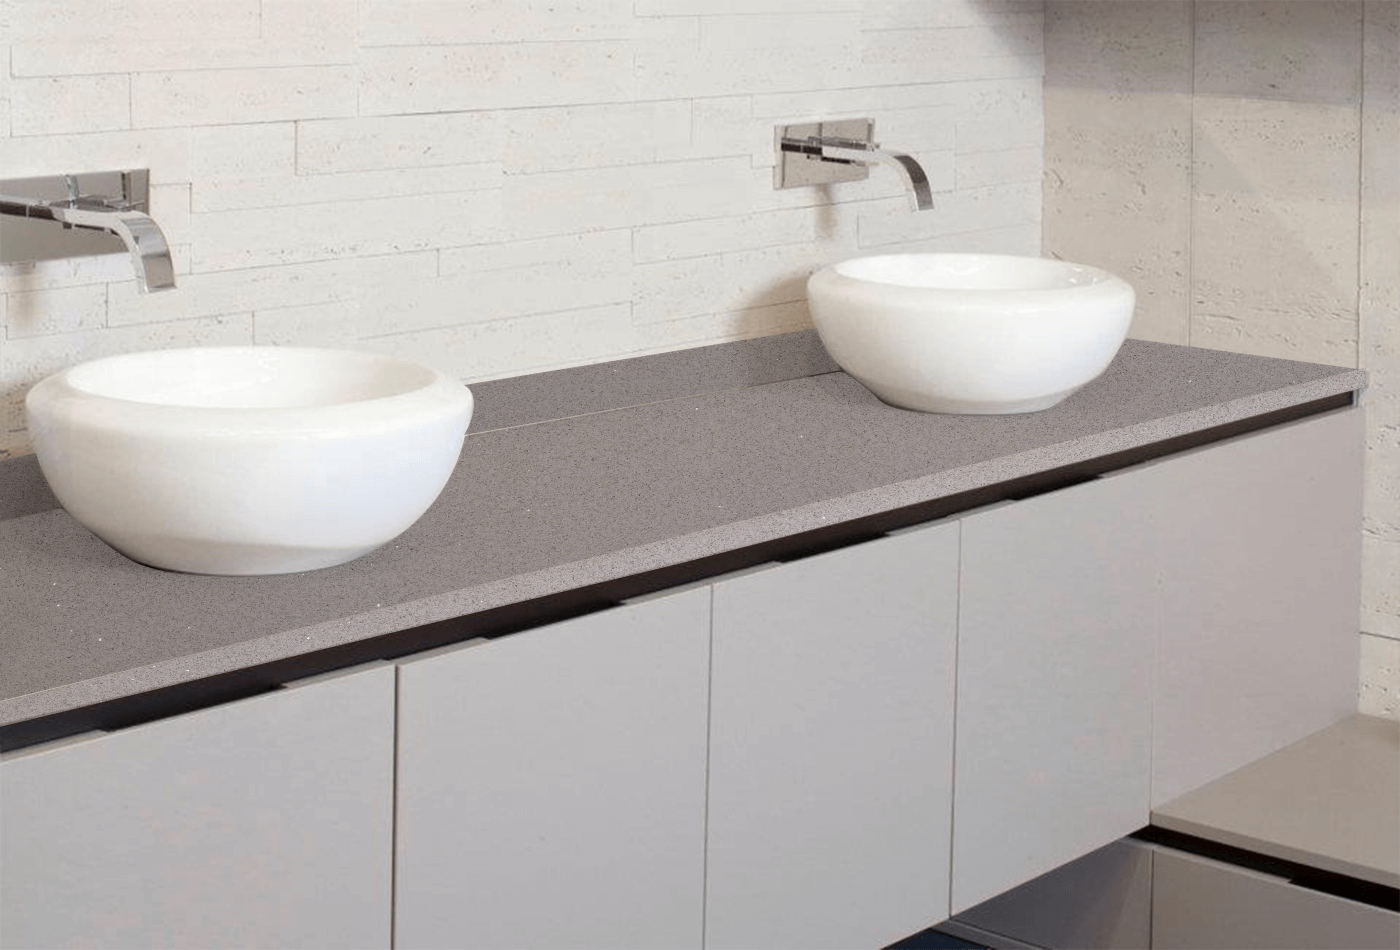 Designing your kitchen Worktop with Metallic Materials for elegant kitchen